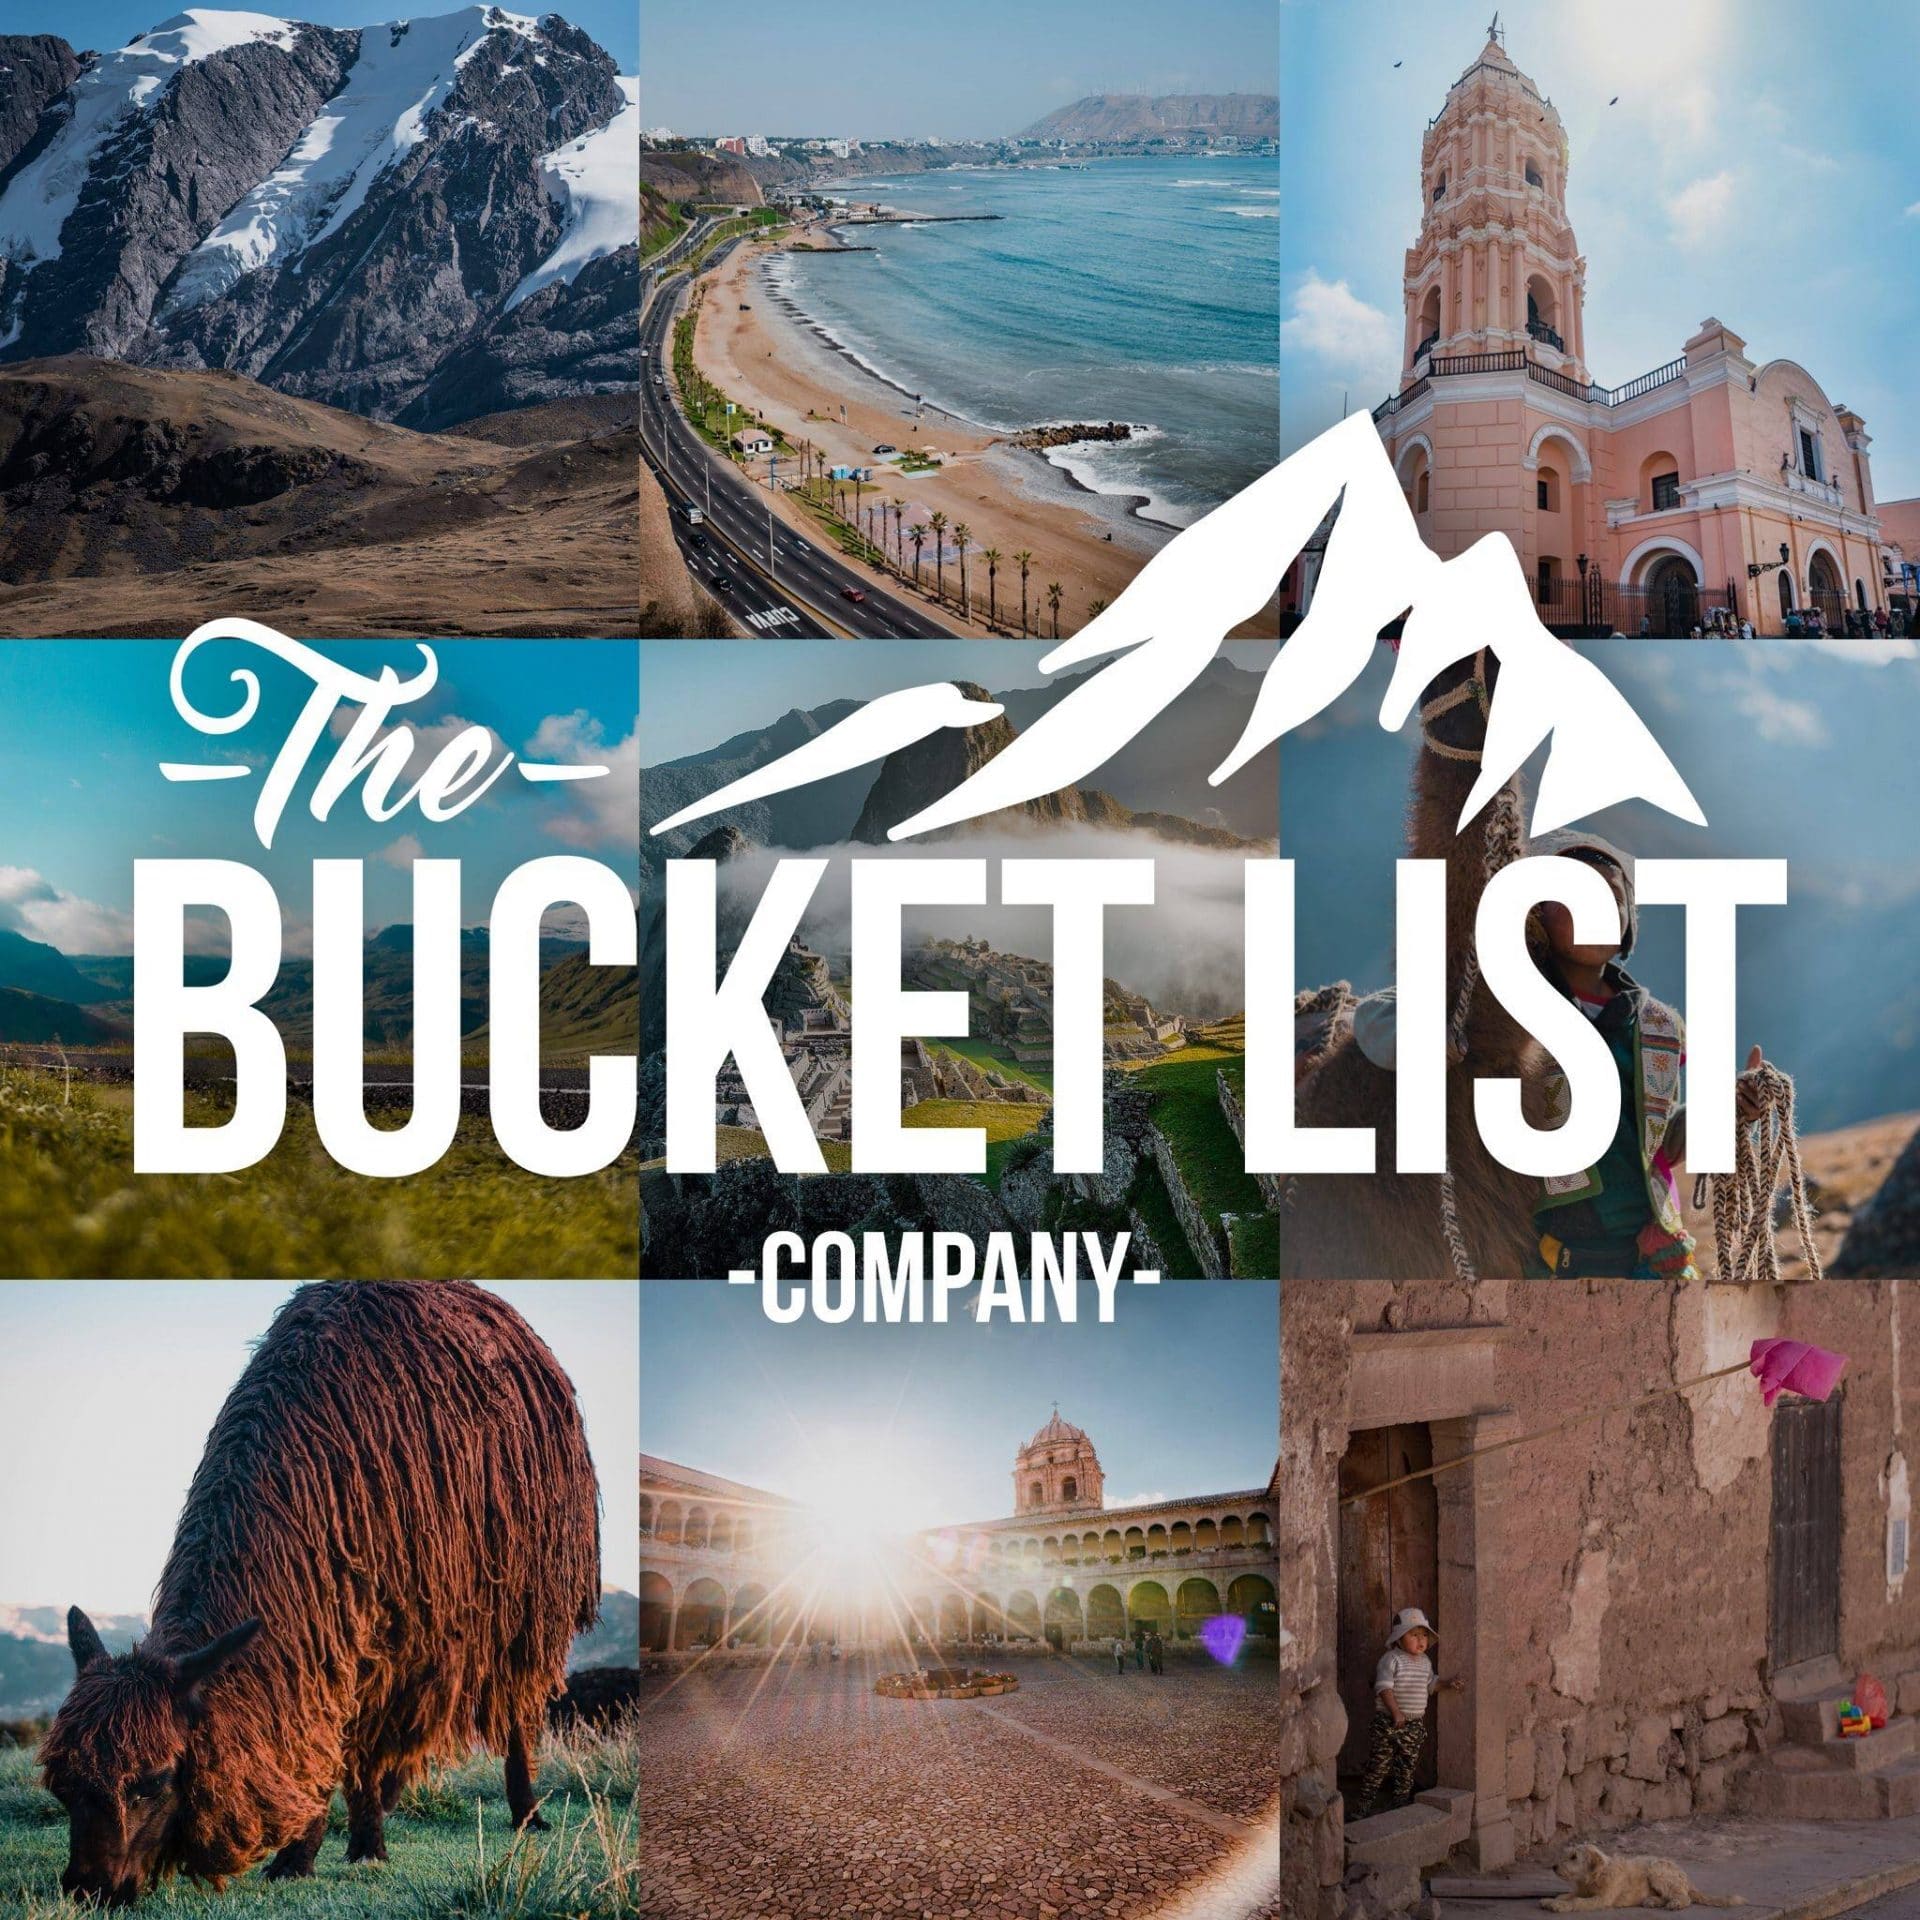 The Bucket List Company